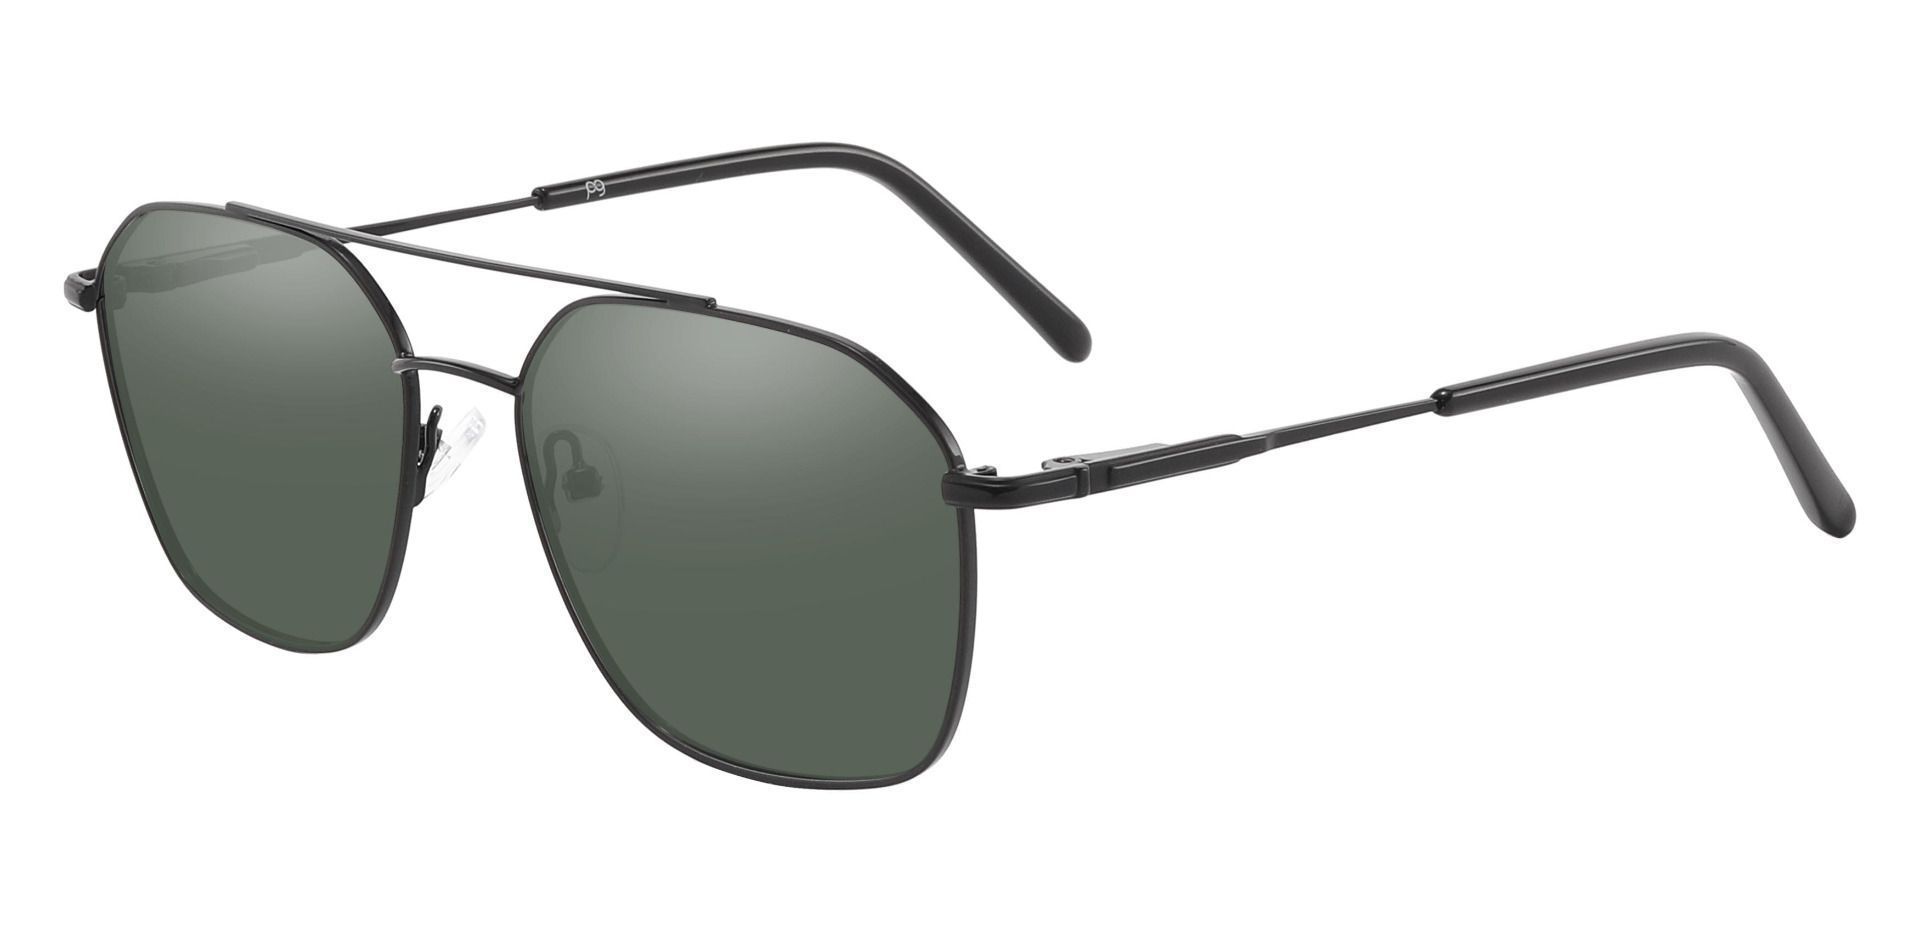 Harvey Aviator Non-Rx Sunglasses - Black Frame With Green Lenses